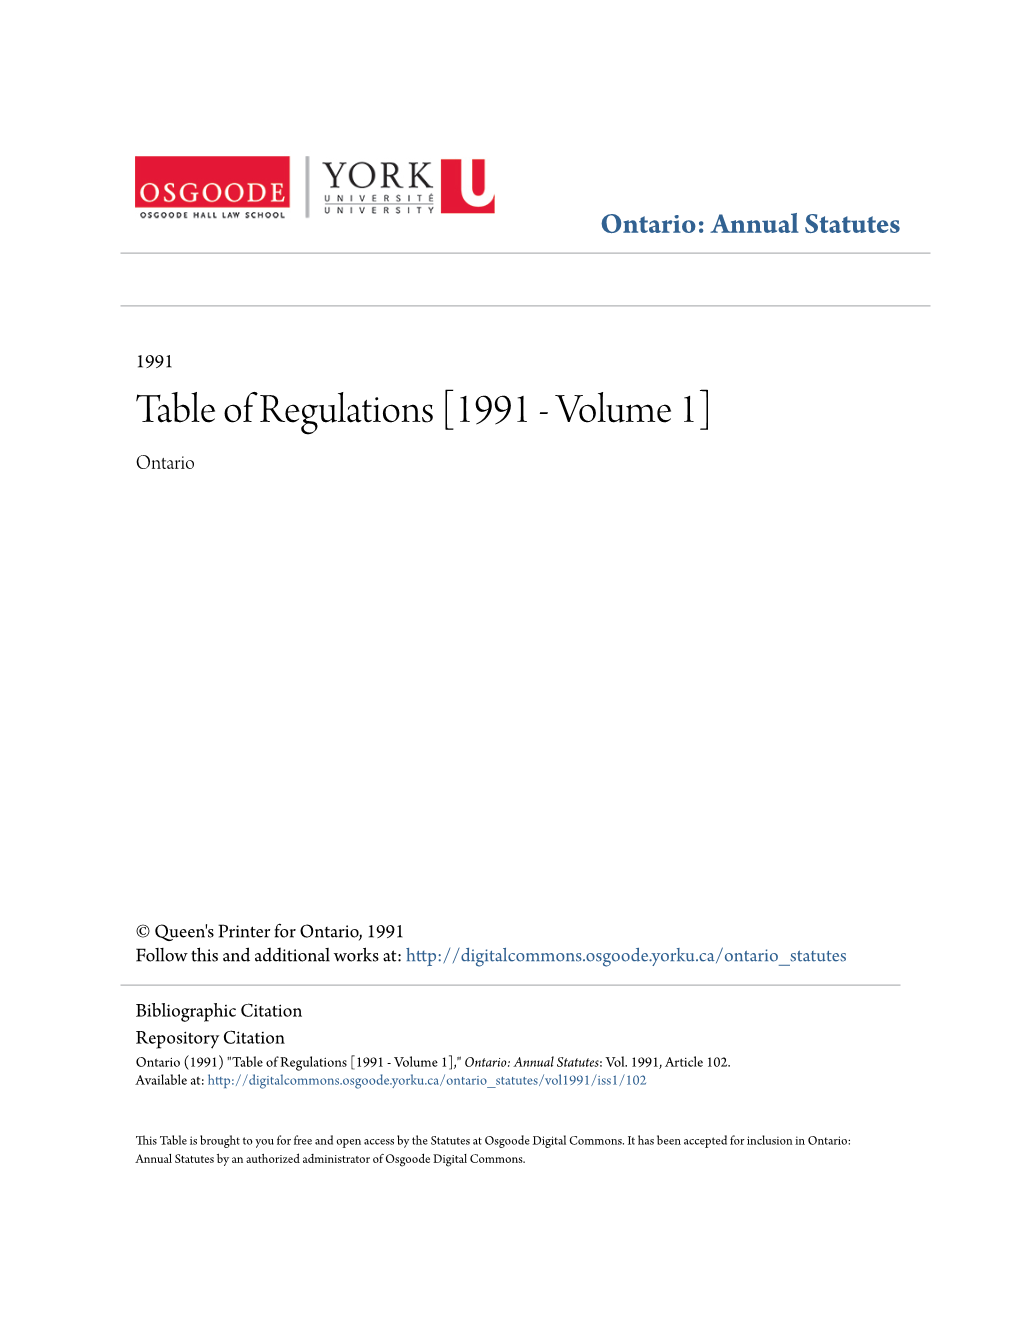 Table of Regulations [1991 - Volume 1] Ontario